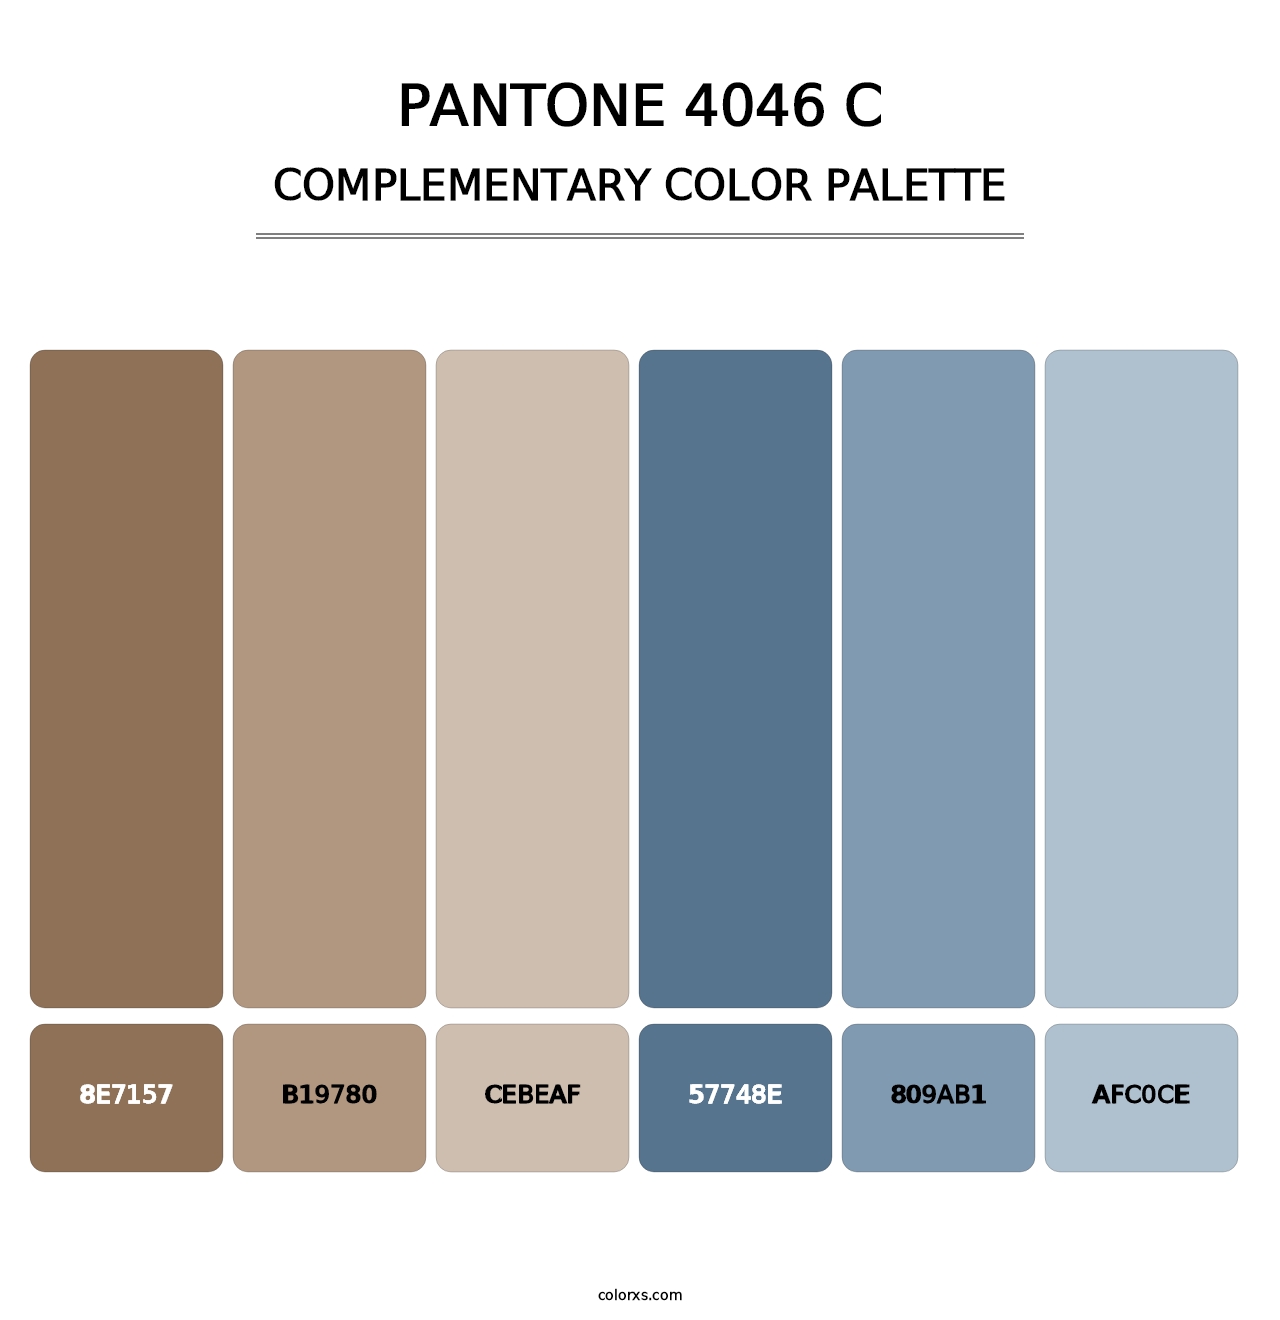 PANTONE 4046 C - Complementary Color Palette